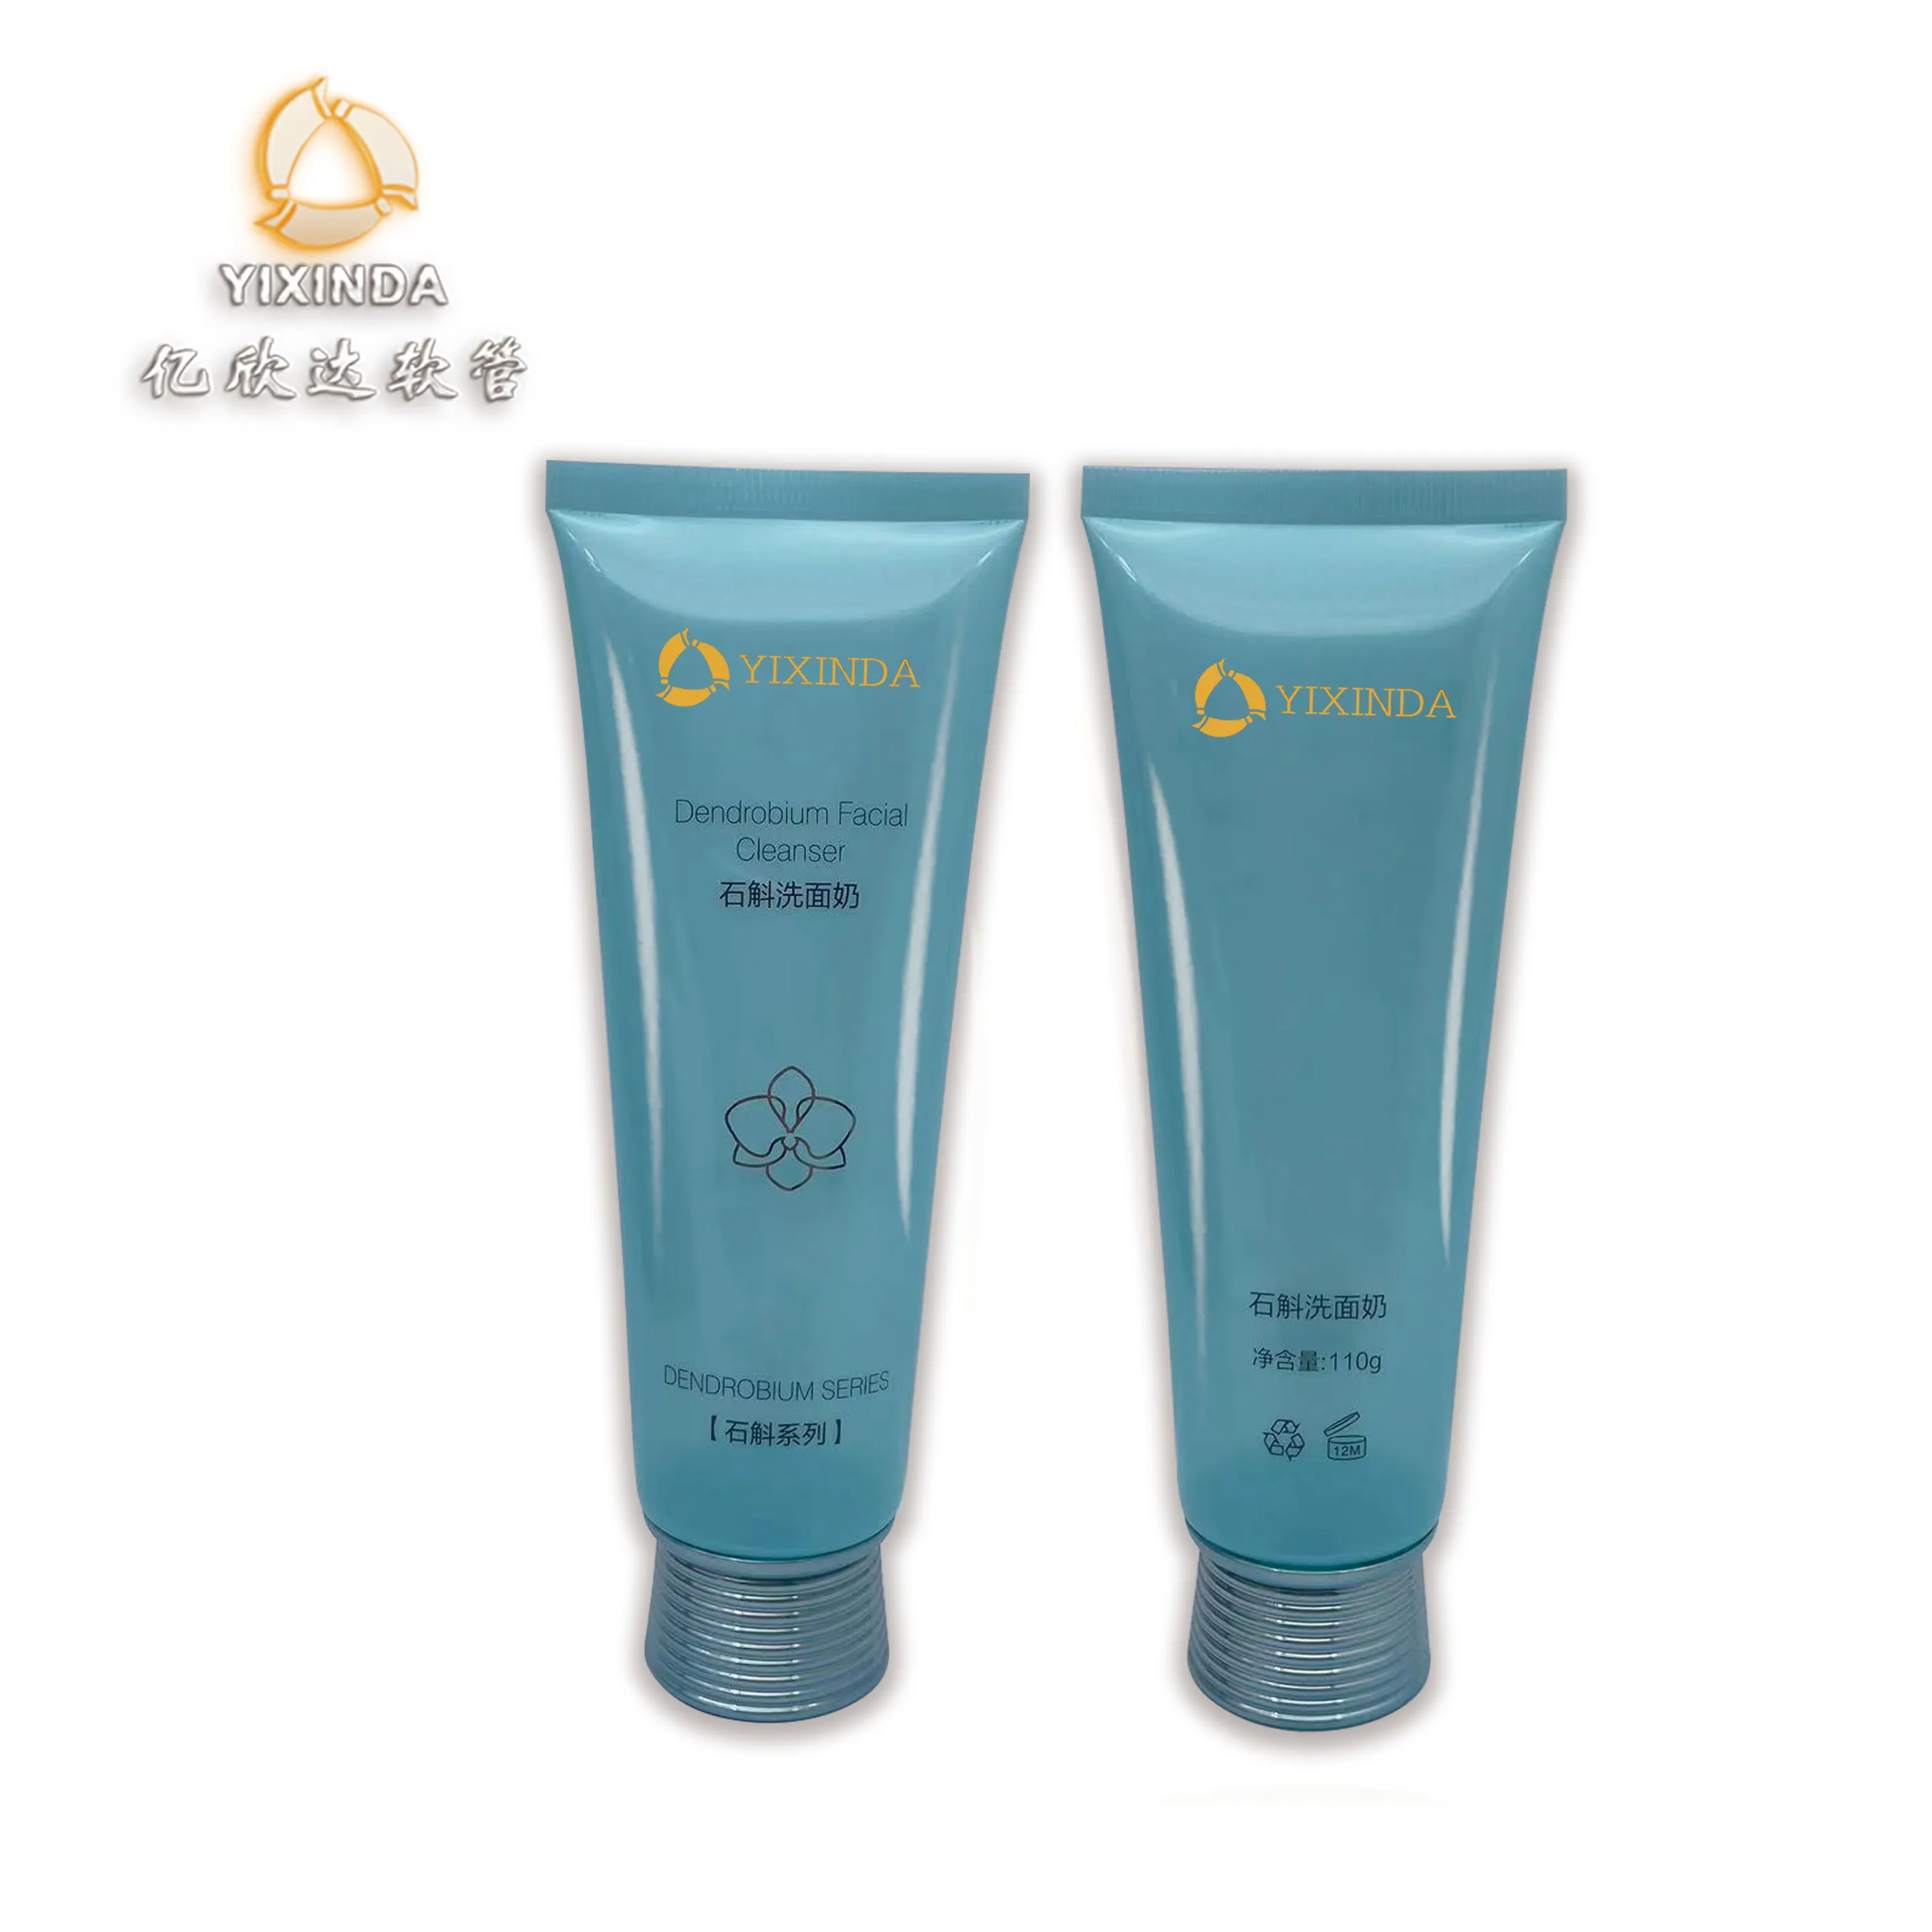 YI XIN DA Dendrobium facial Cleanser Makeup Gloss Tube Clear Plastic